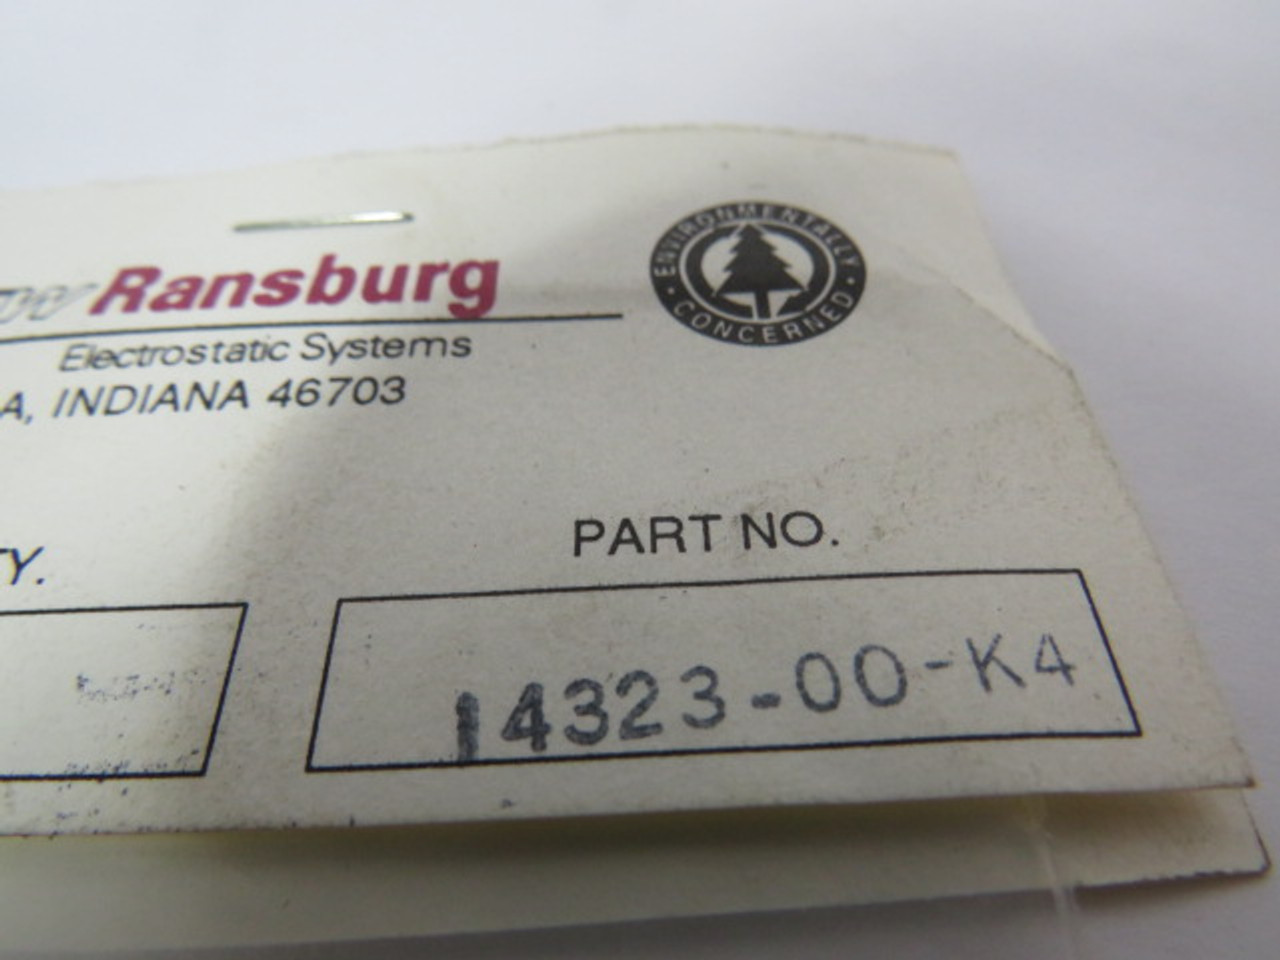 ITW Ransburg 14323-00-K4 Chevron Seal Kit 3/8" Diameter 4-Pack ! NWB !